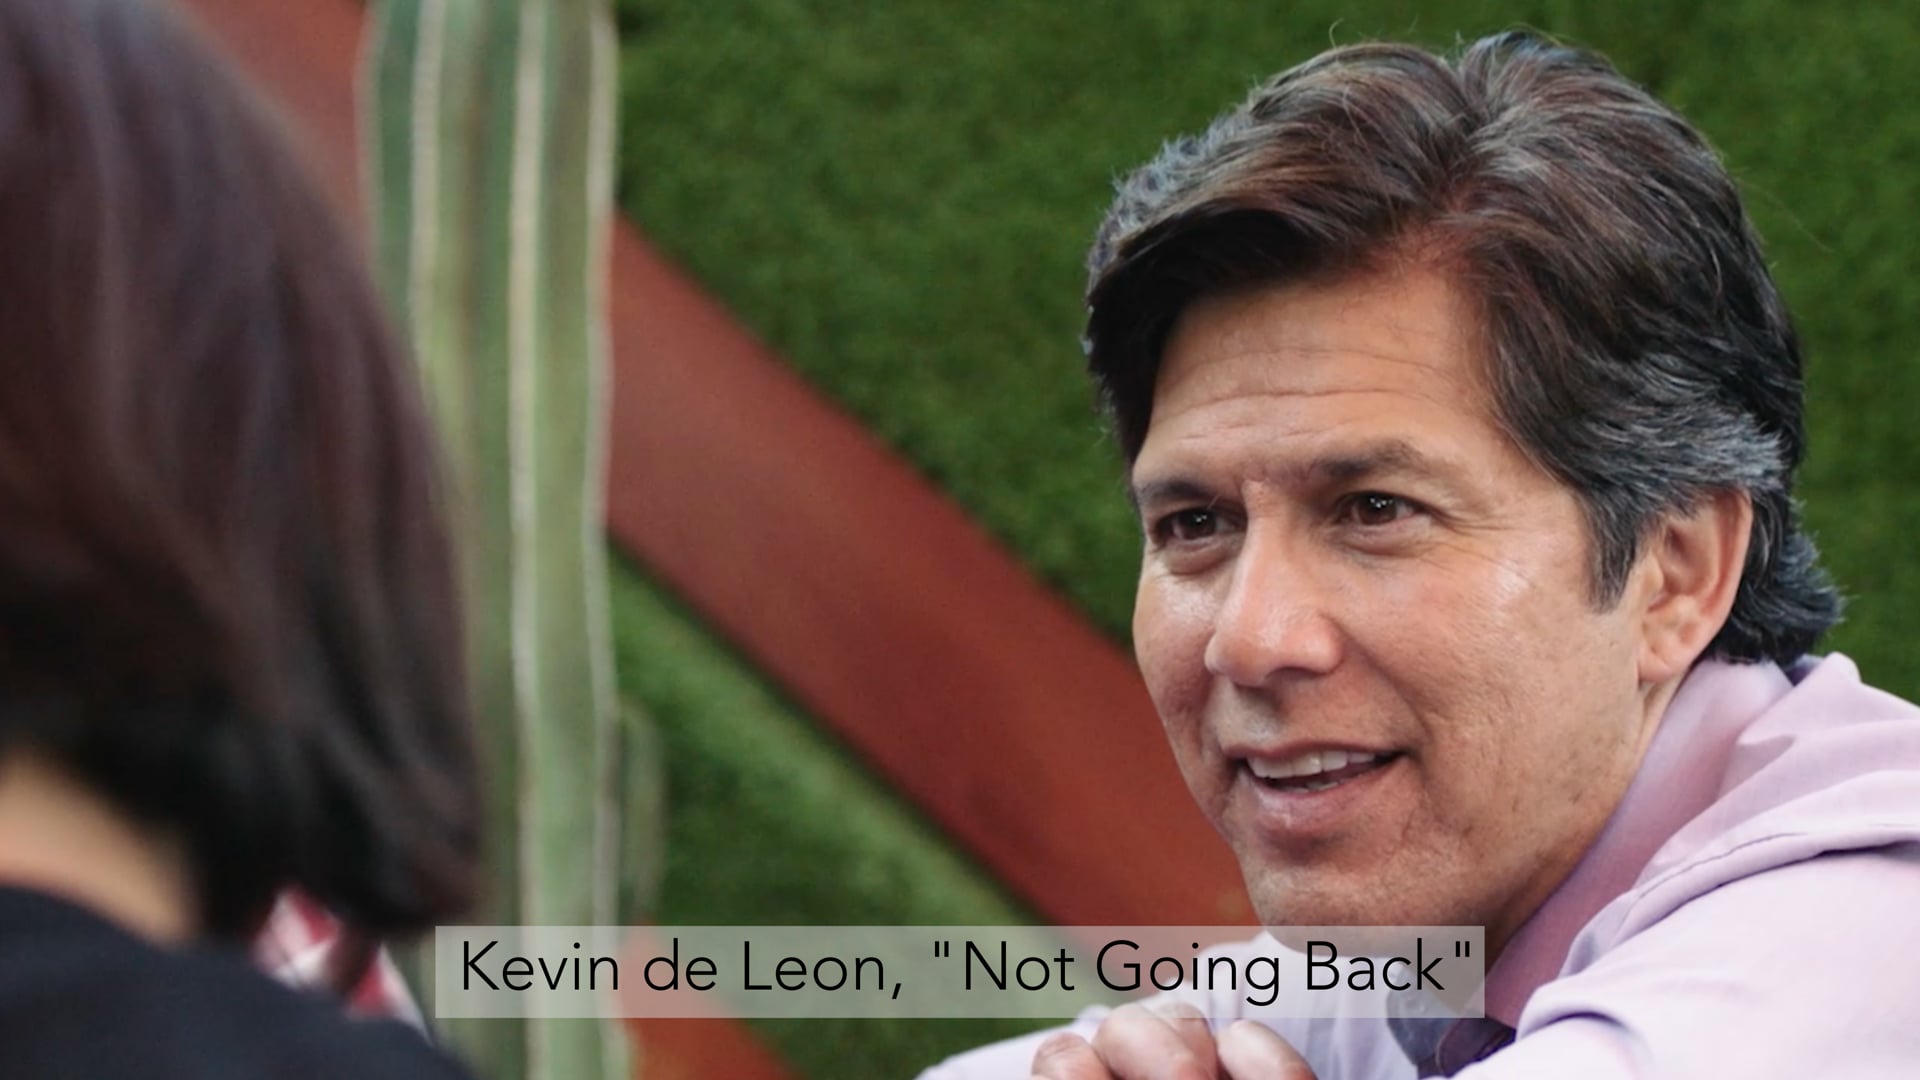  Kevin de Leon, "Not Going Back"